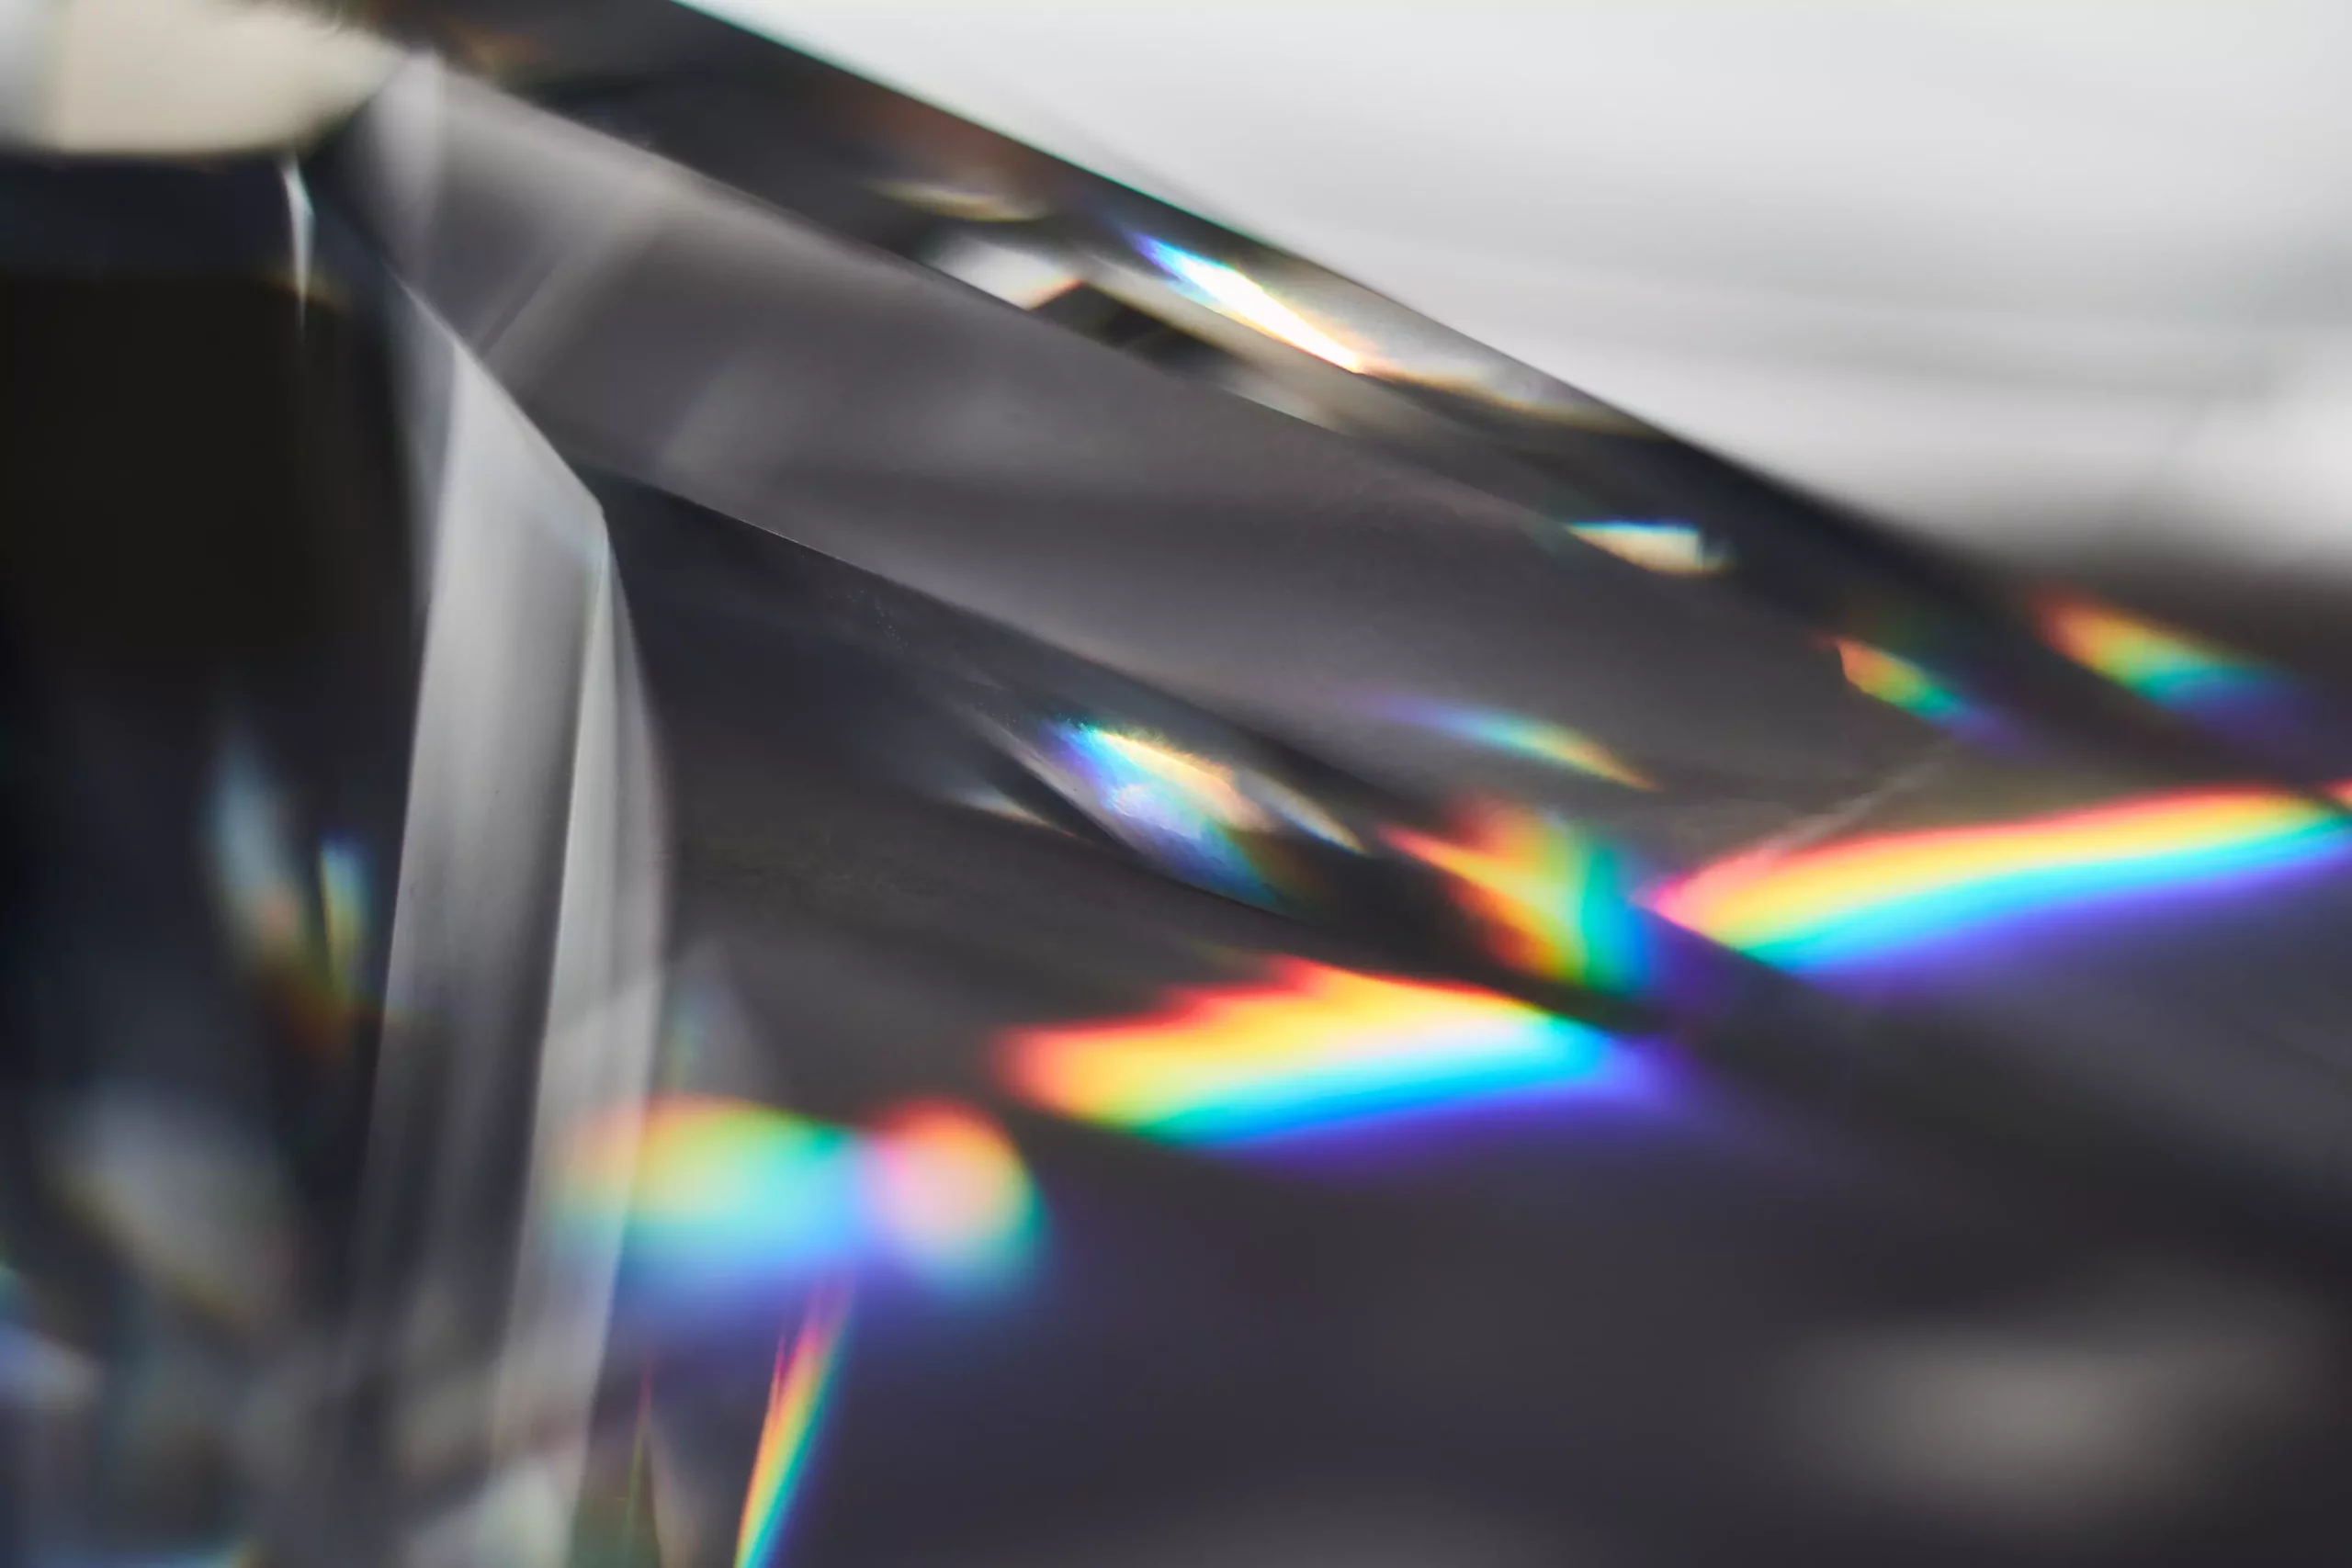 Macro view of a prism dispersing sunlight splitting into a spectrum